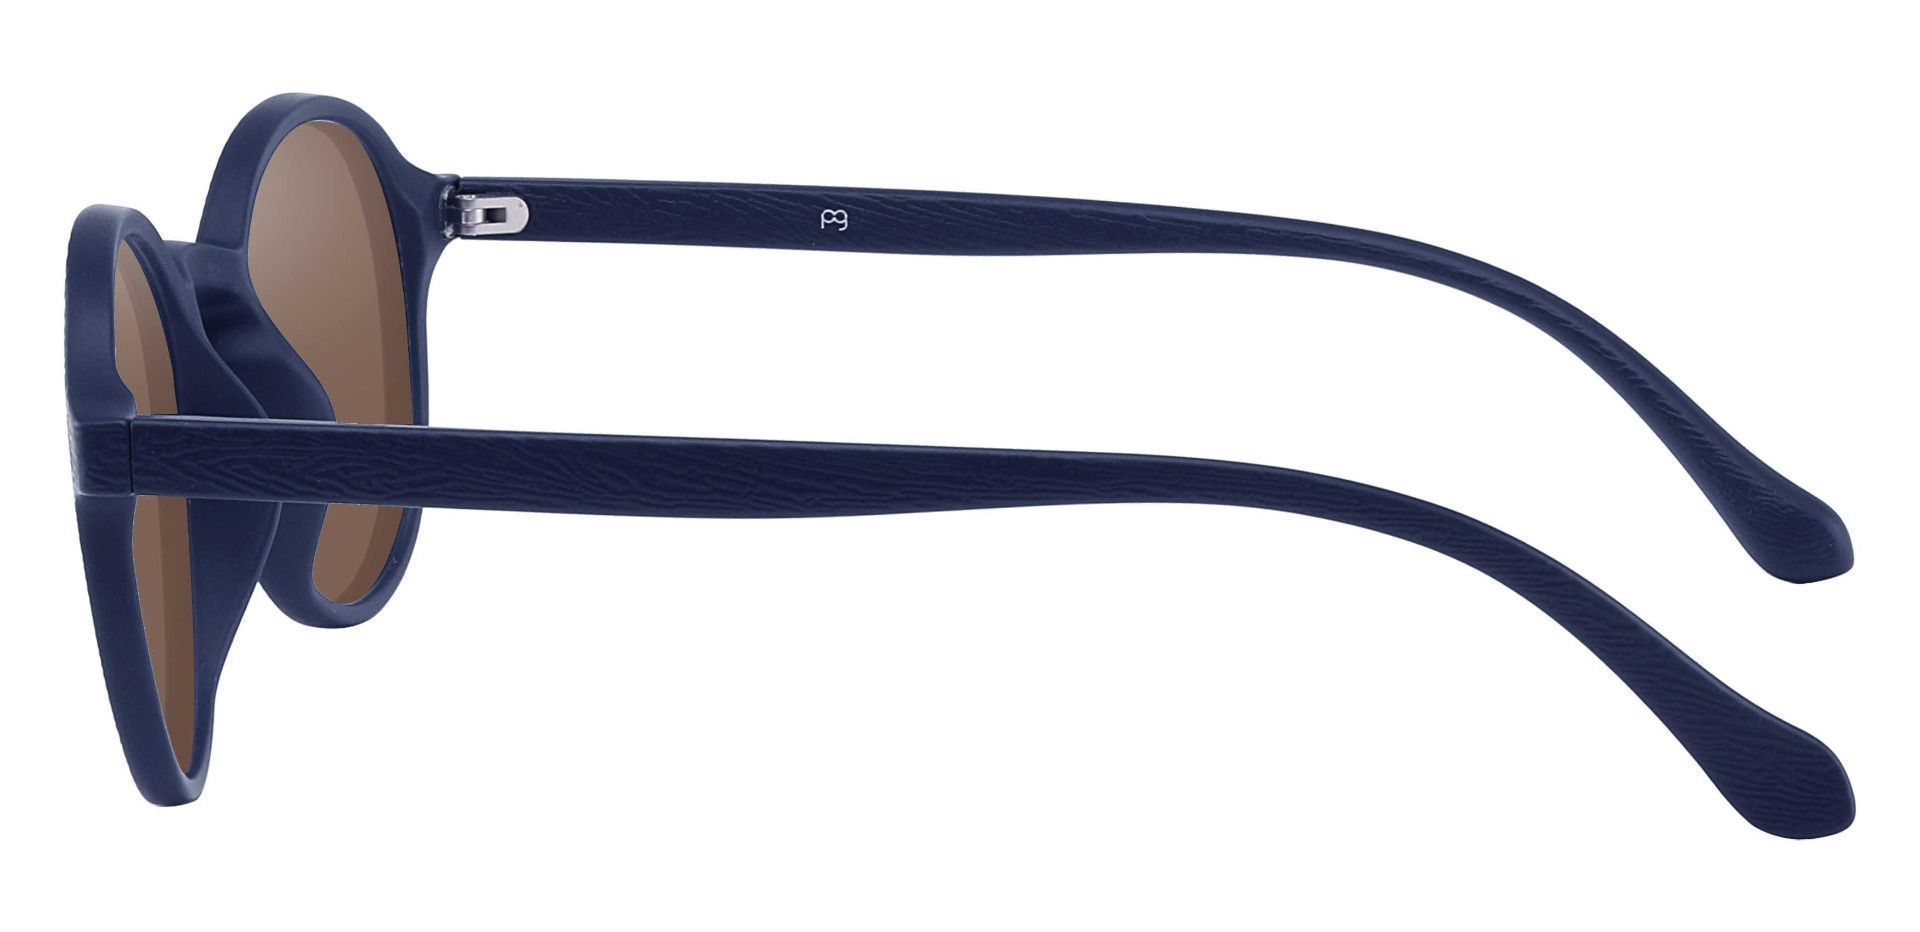 Whitney Round Prescription Sunglasses - Blue Frame With Brown Lenses